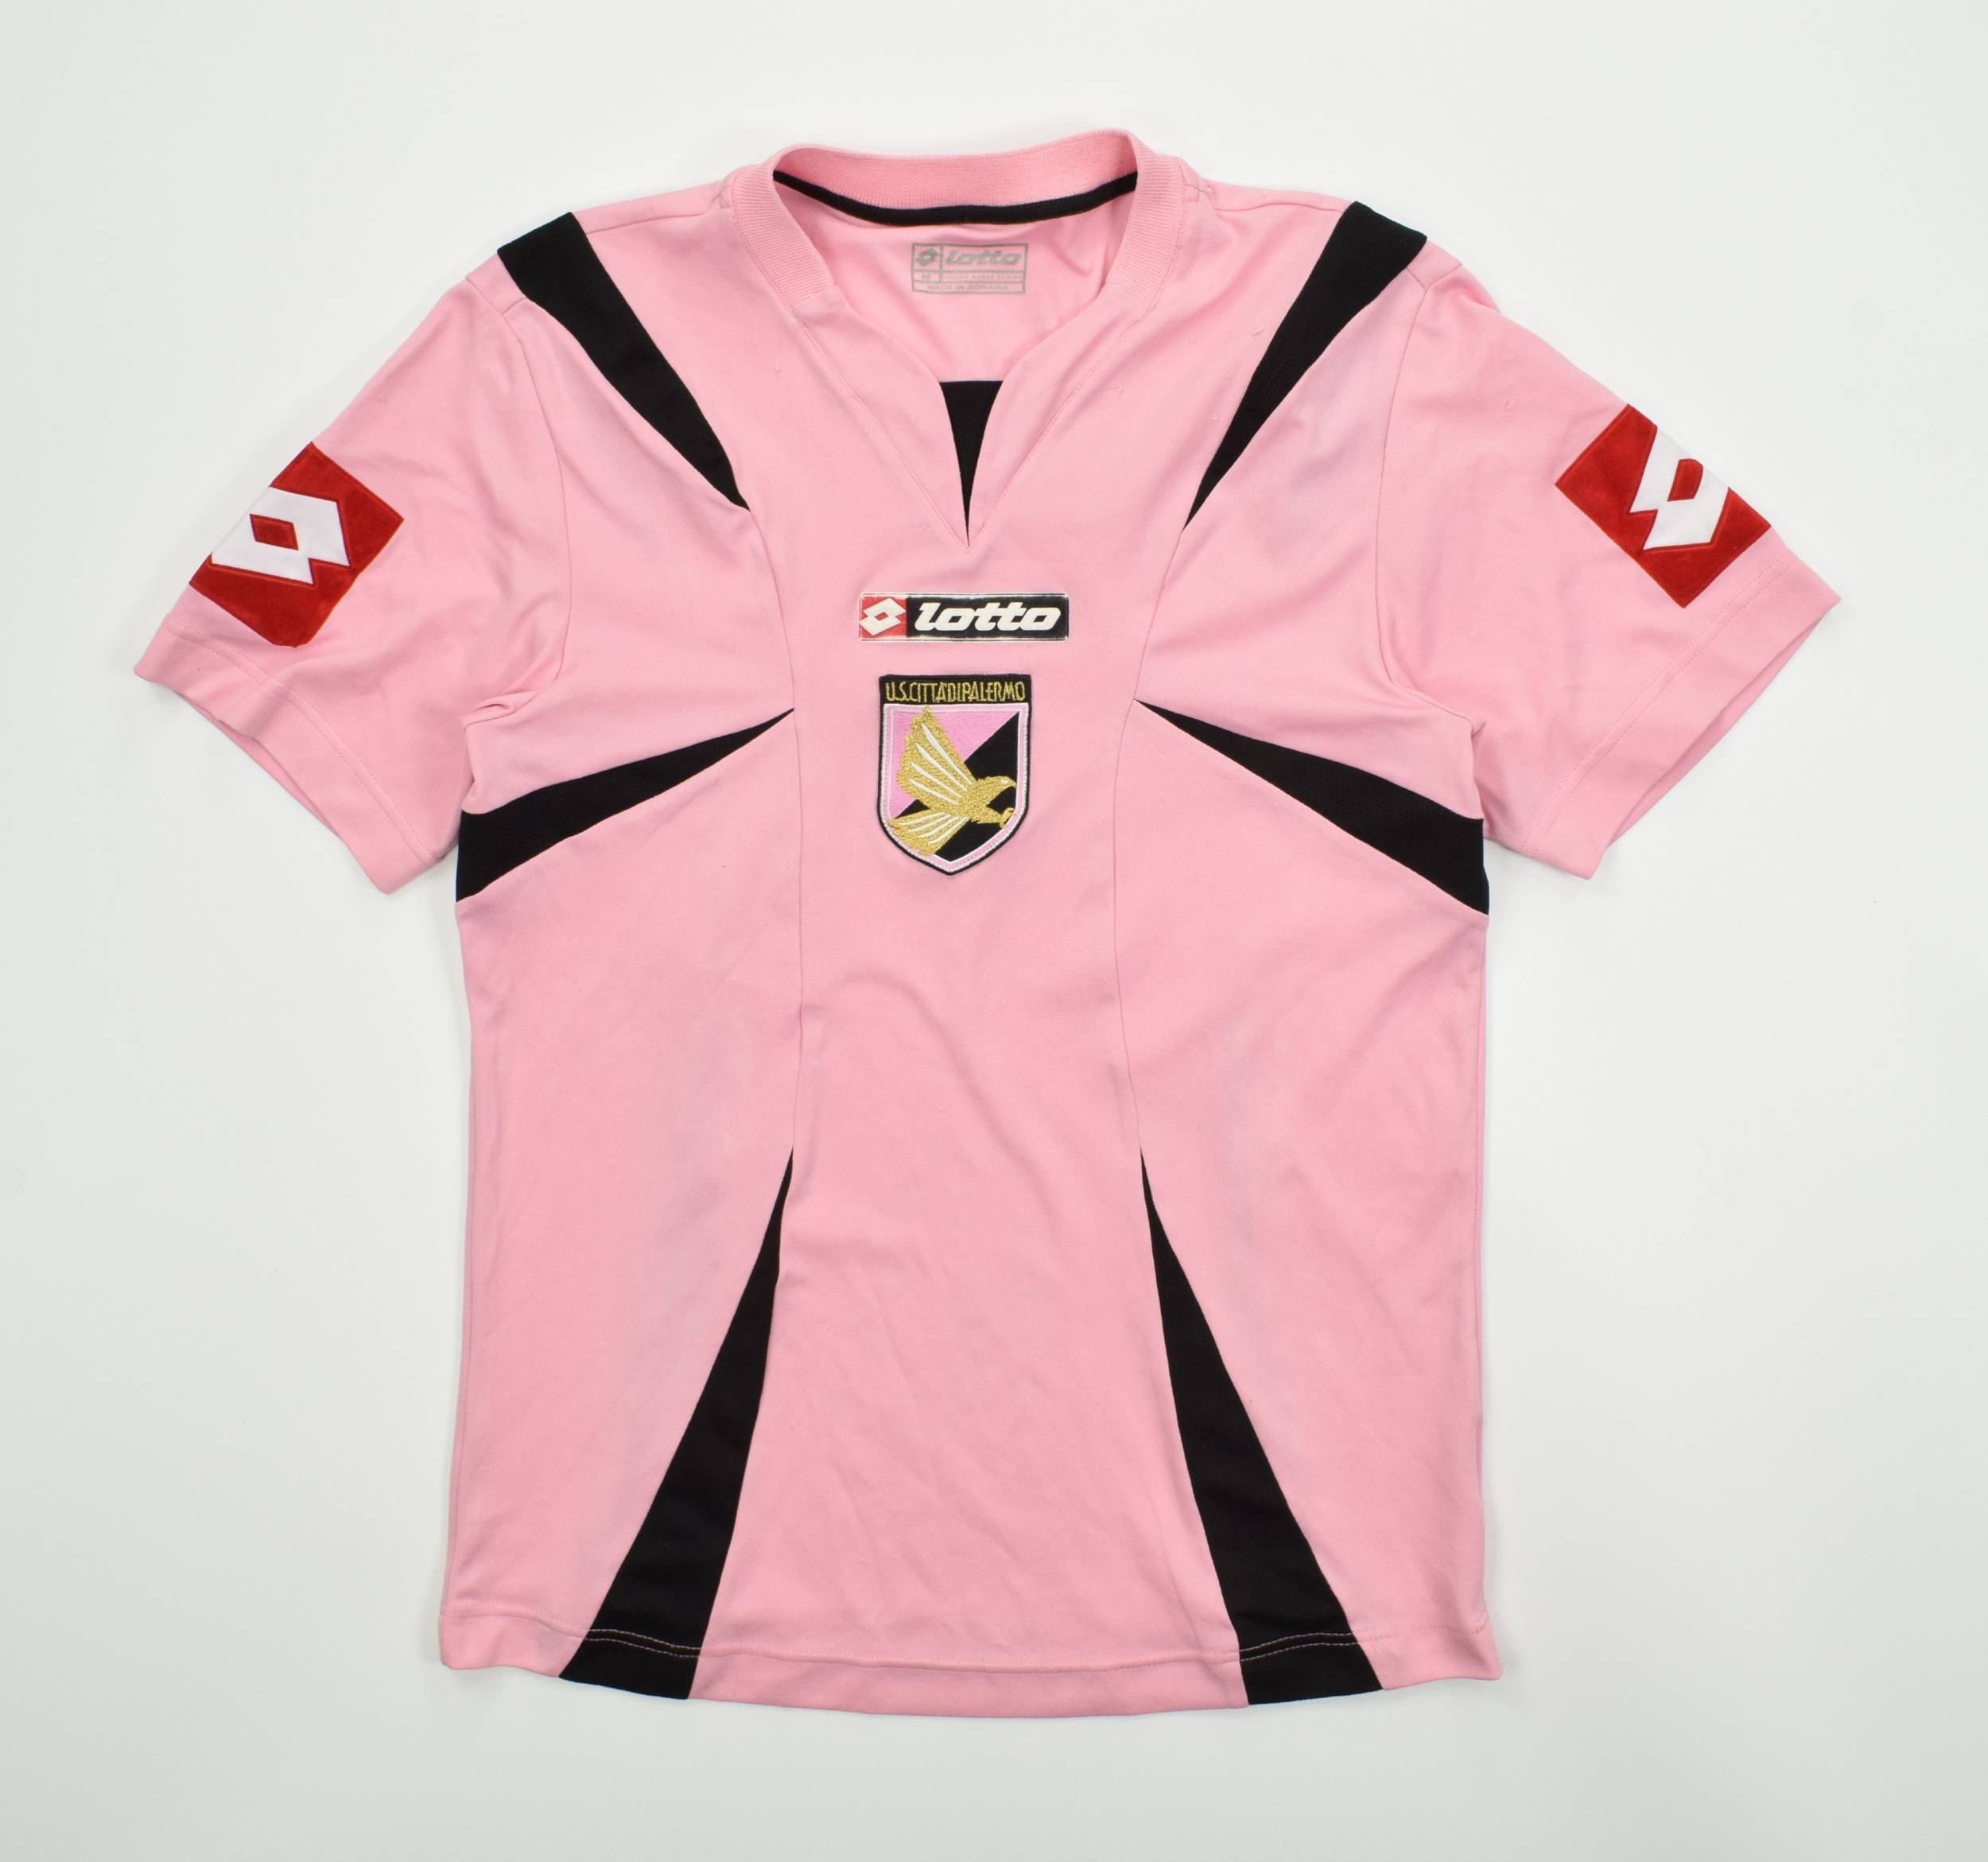 4/5 Palermo adlults 38-40 M 2006 home football shirt jersey soccer